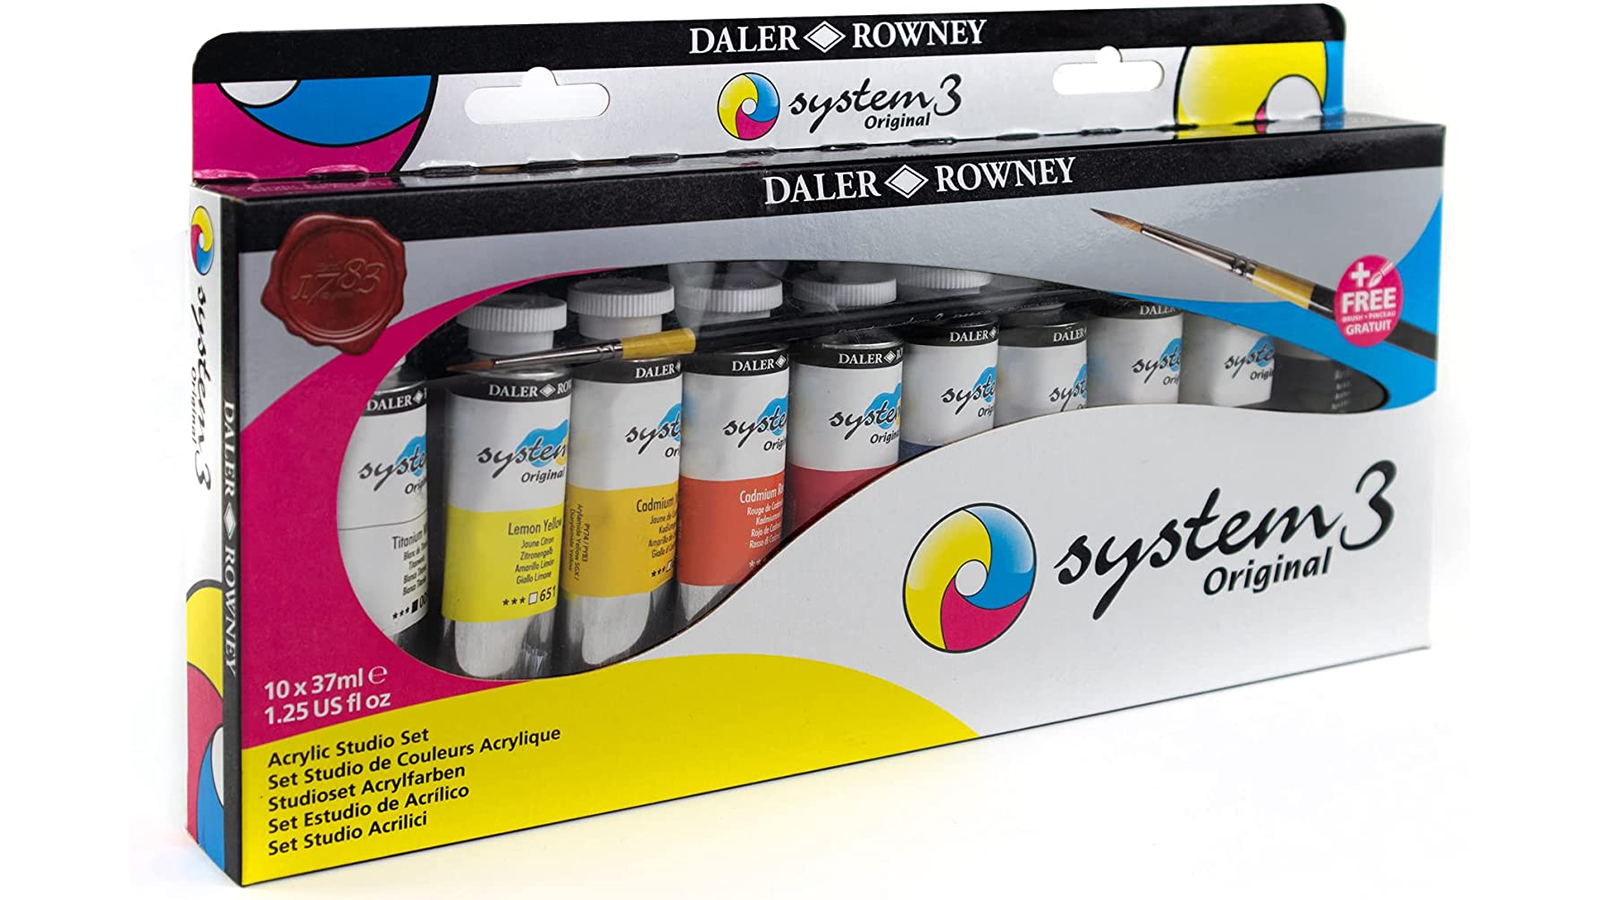 A set of Daler Rowney System 3 acrylic paints